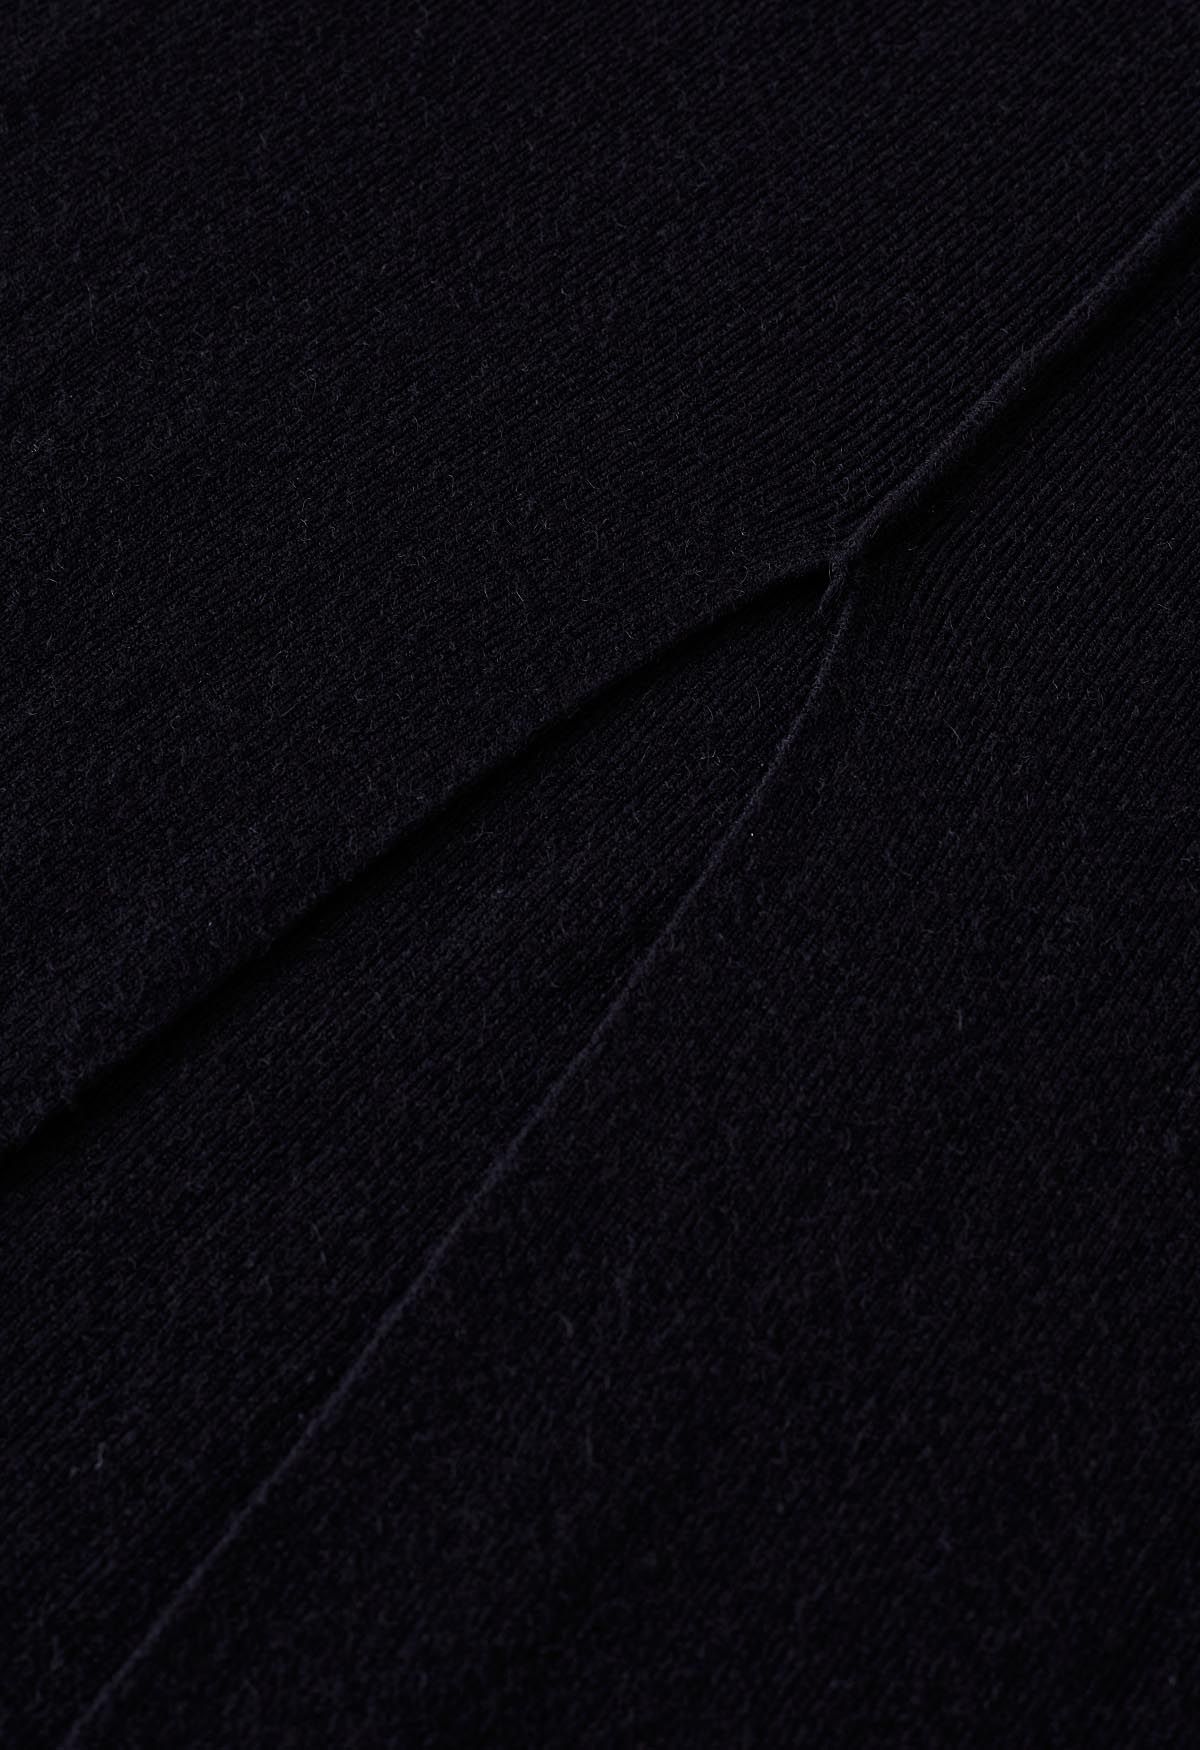 Front Slit Bodycon Knit Dress in Black